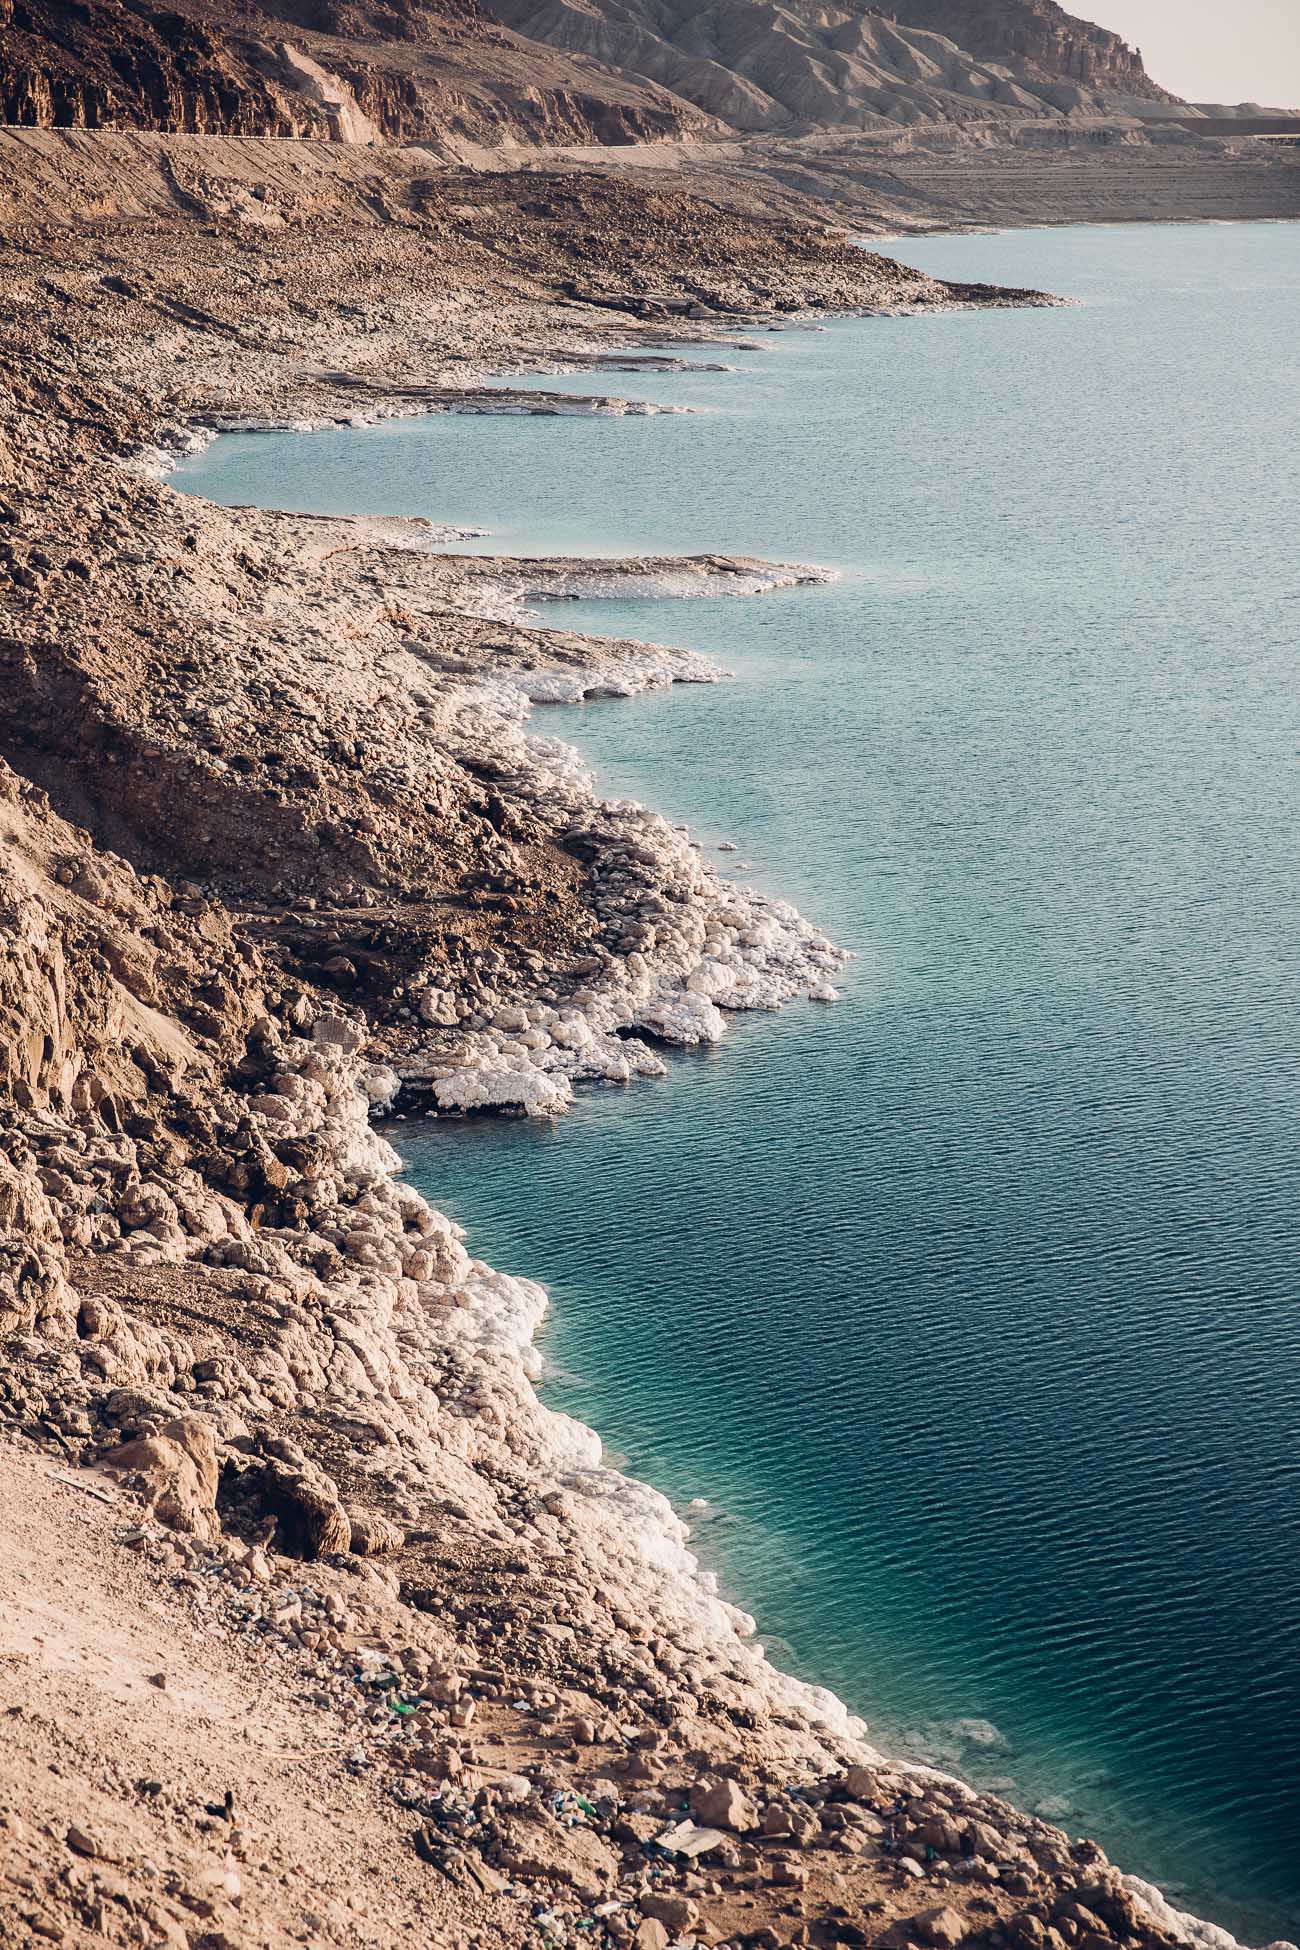 Salt Formations at the Dead Sea in Jordan